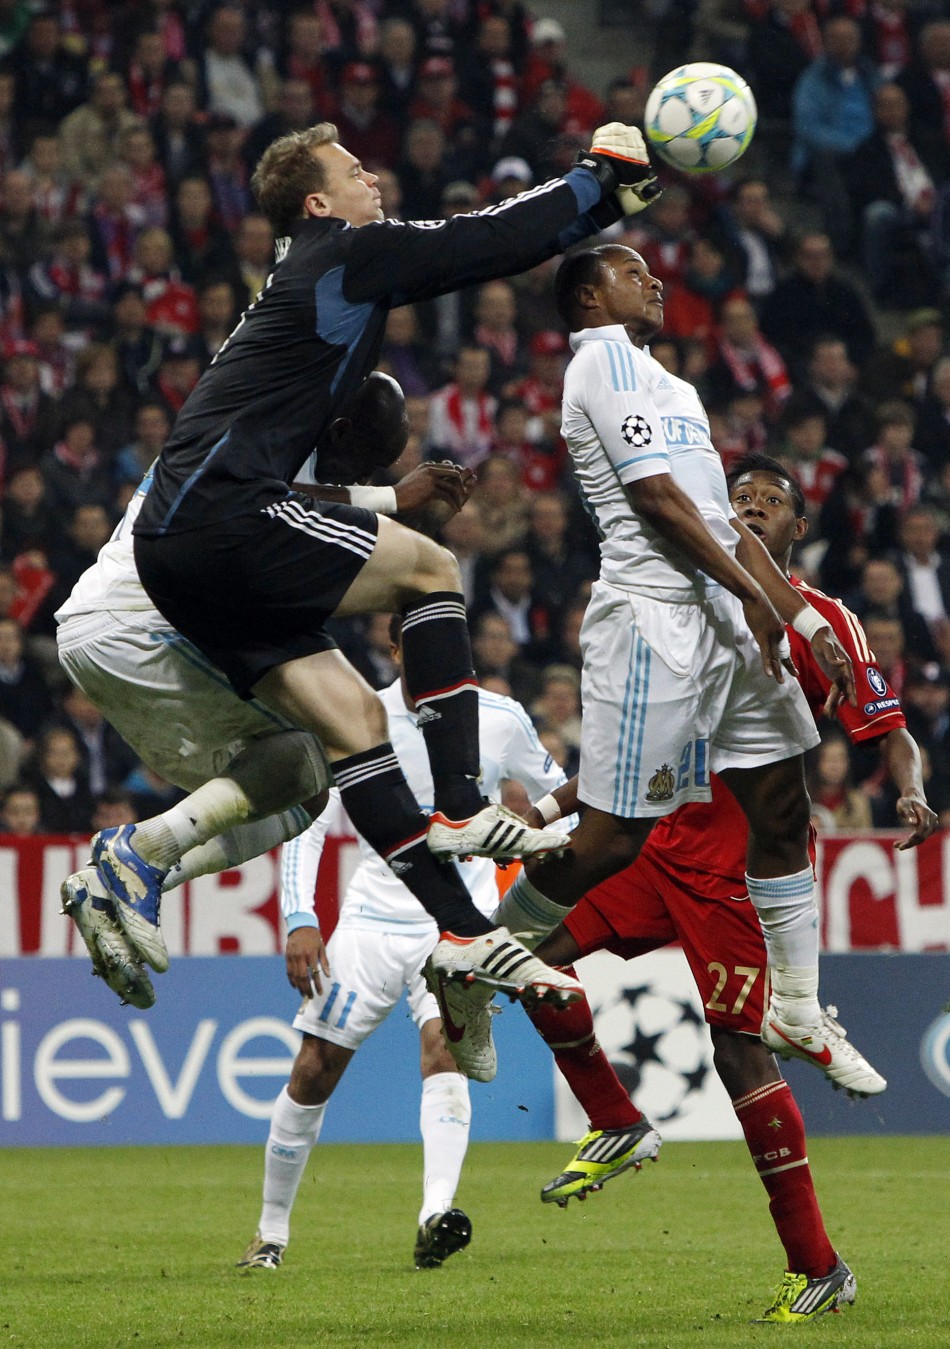 Bayern Munich039s goalkeeper Neuer saves ball against Olympique Marseille039s Ayew during Champions League quarter-final soccer match in Munich